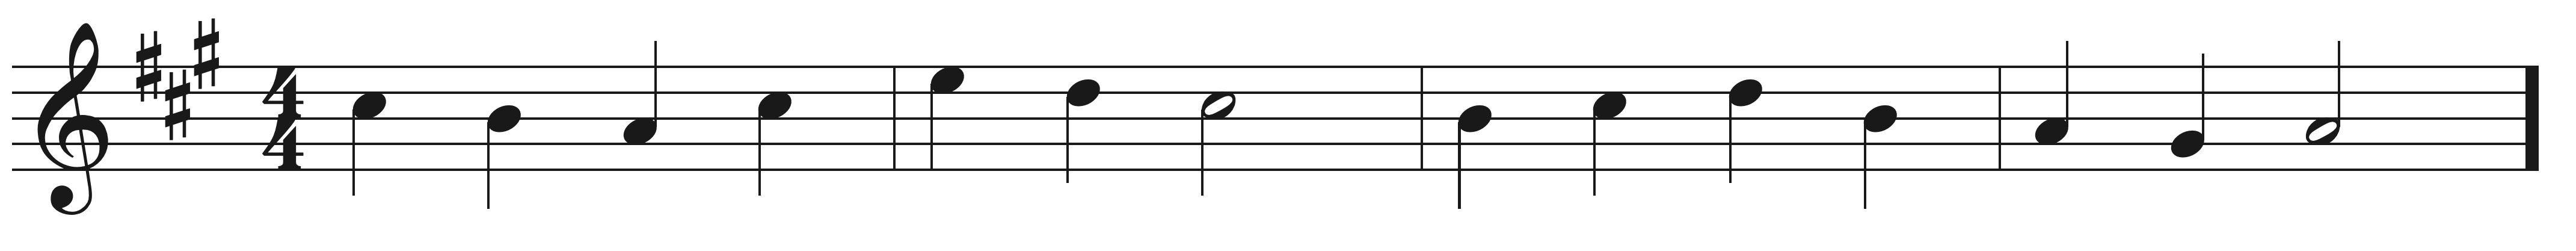 Harmonizing with Non-Chord Tones Aural Training exercise example